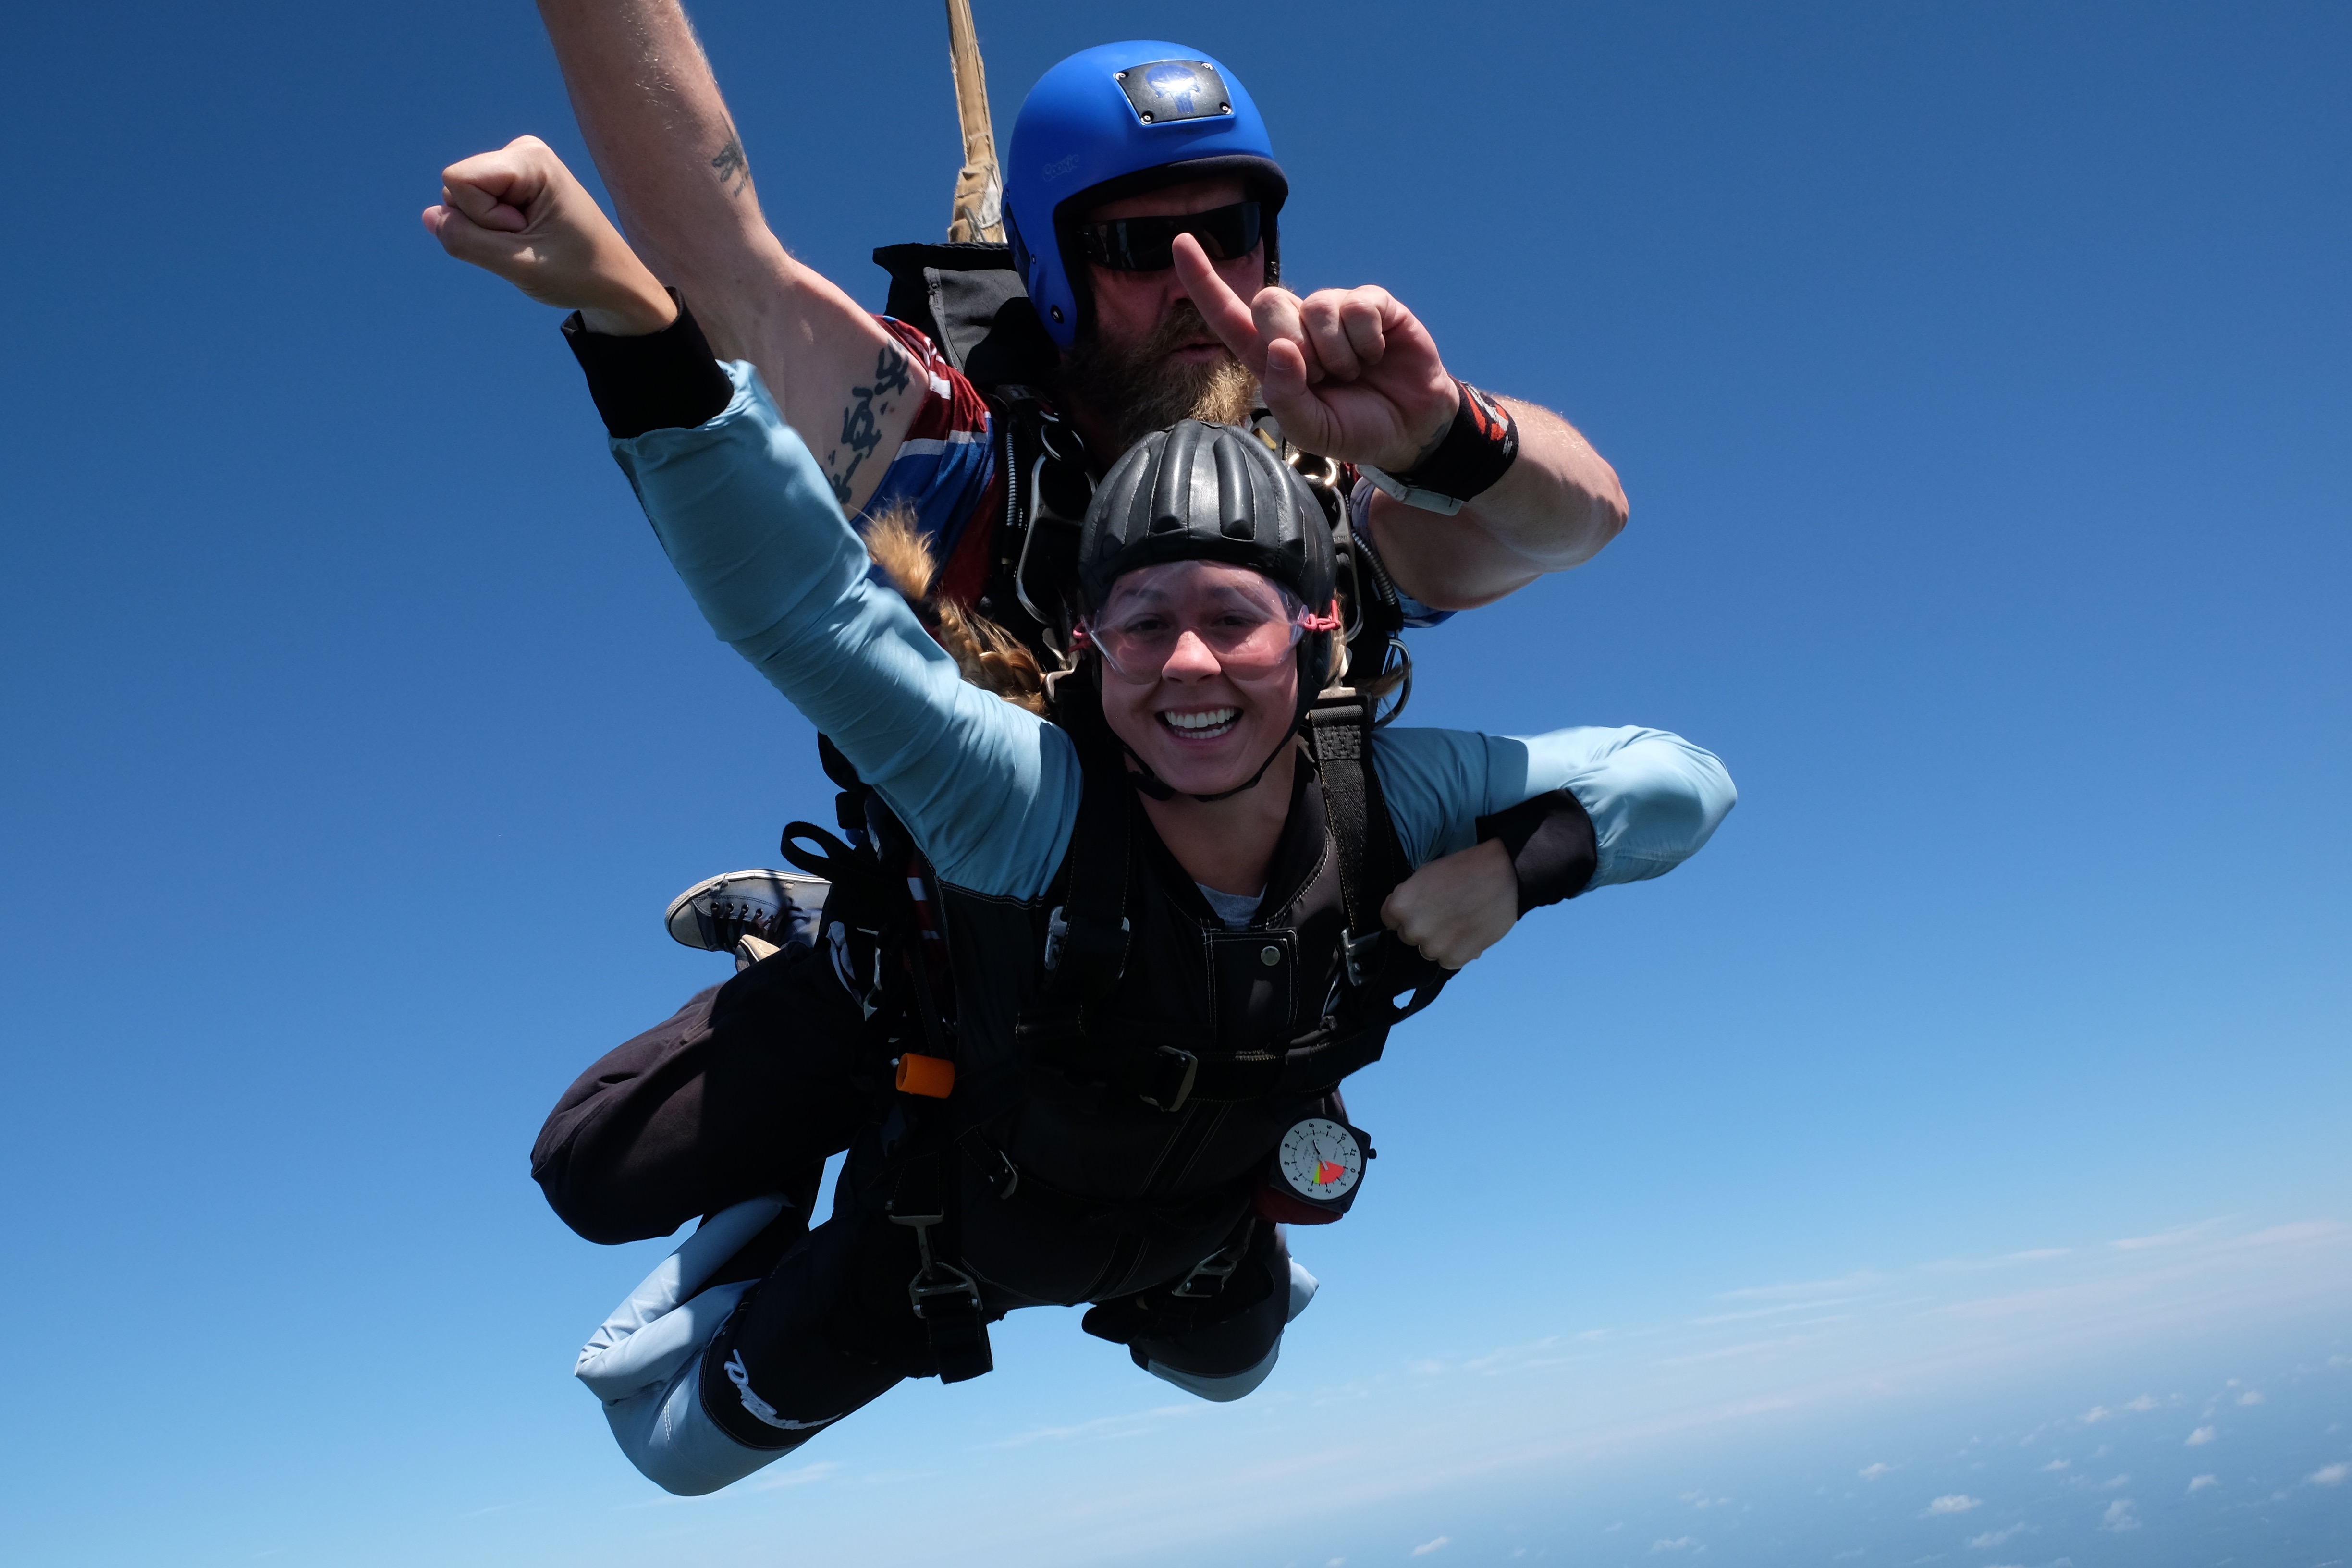 Celebrate with a Skydive at Skydive Carolina!